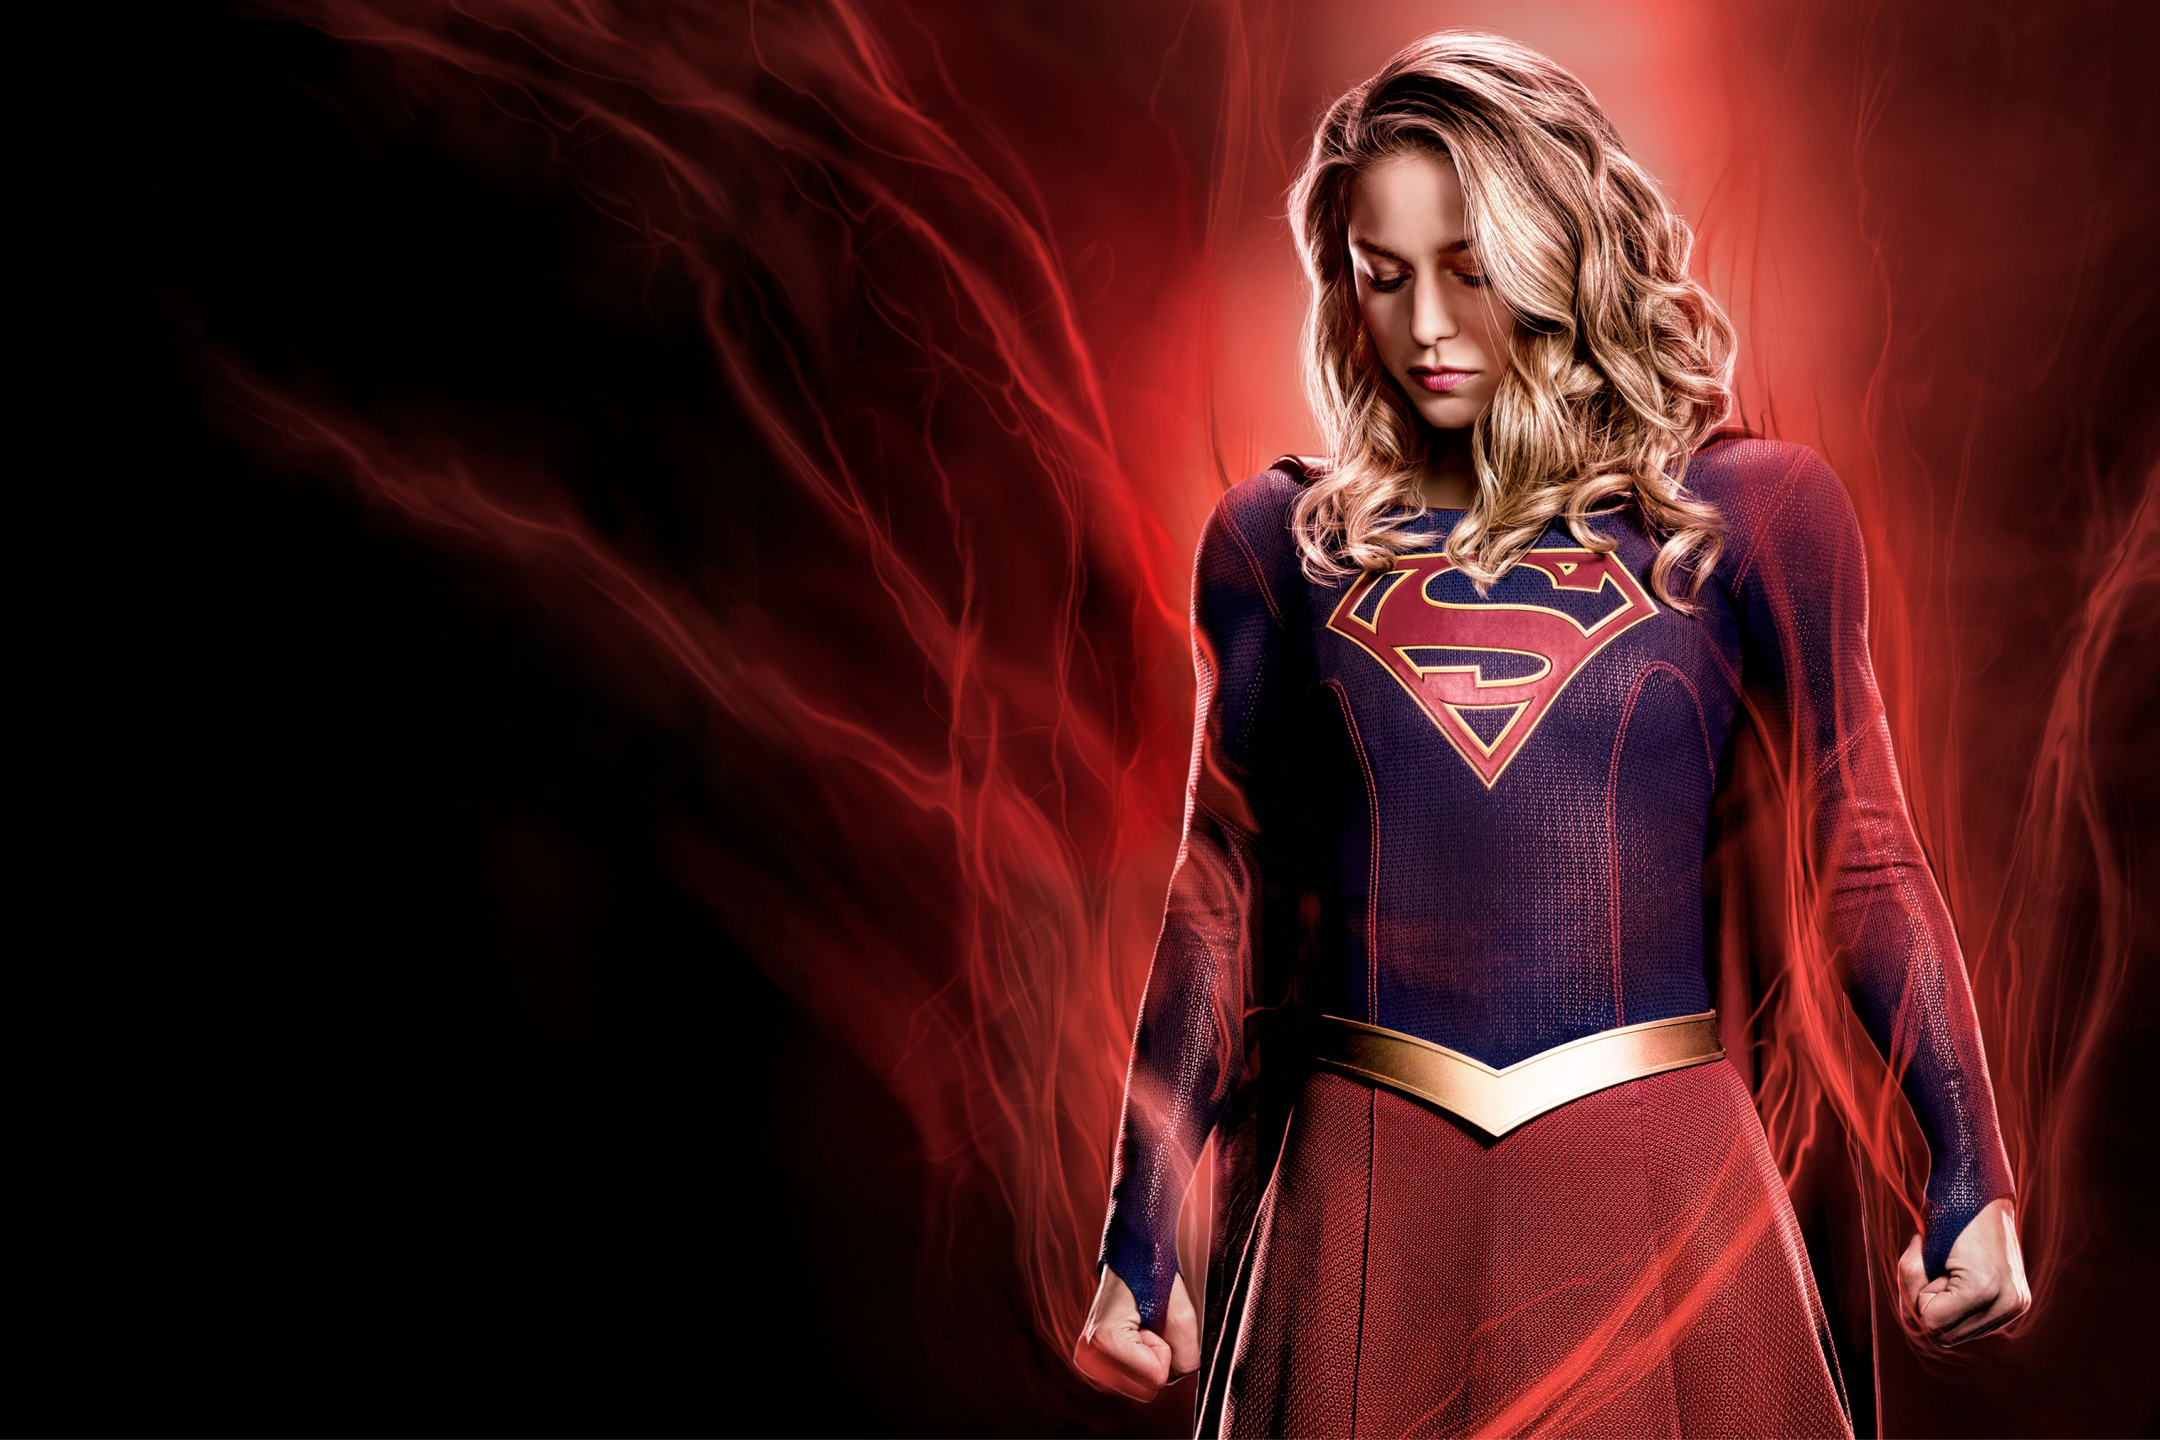 Descarga gratuita de fondo de pantalla para móvil de Superhombre, Series De Televisión, Dc Comics, Supergirl, Melissa Benoist, Superchica (Programa De Televisión), Kara Danvers.